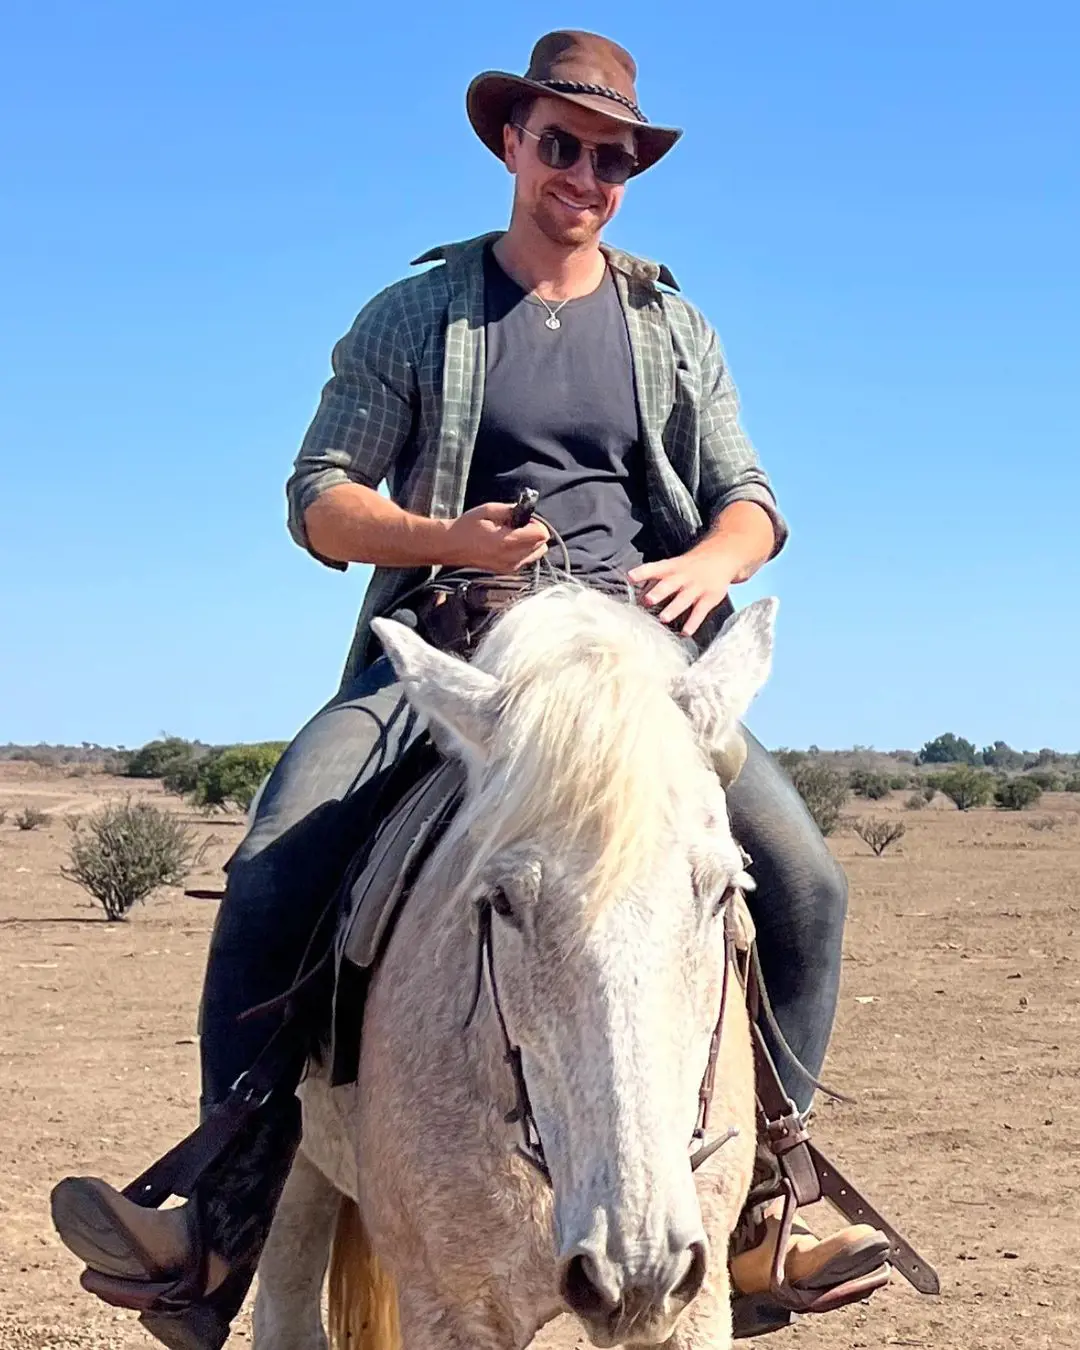 Richard enjoying his free time riding a horse